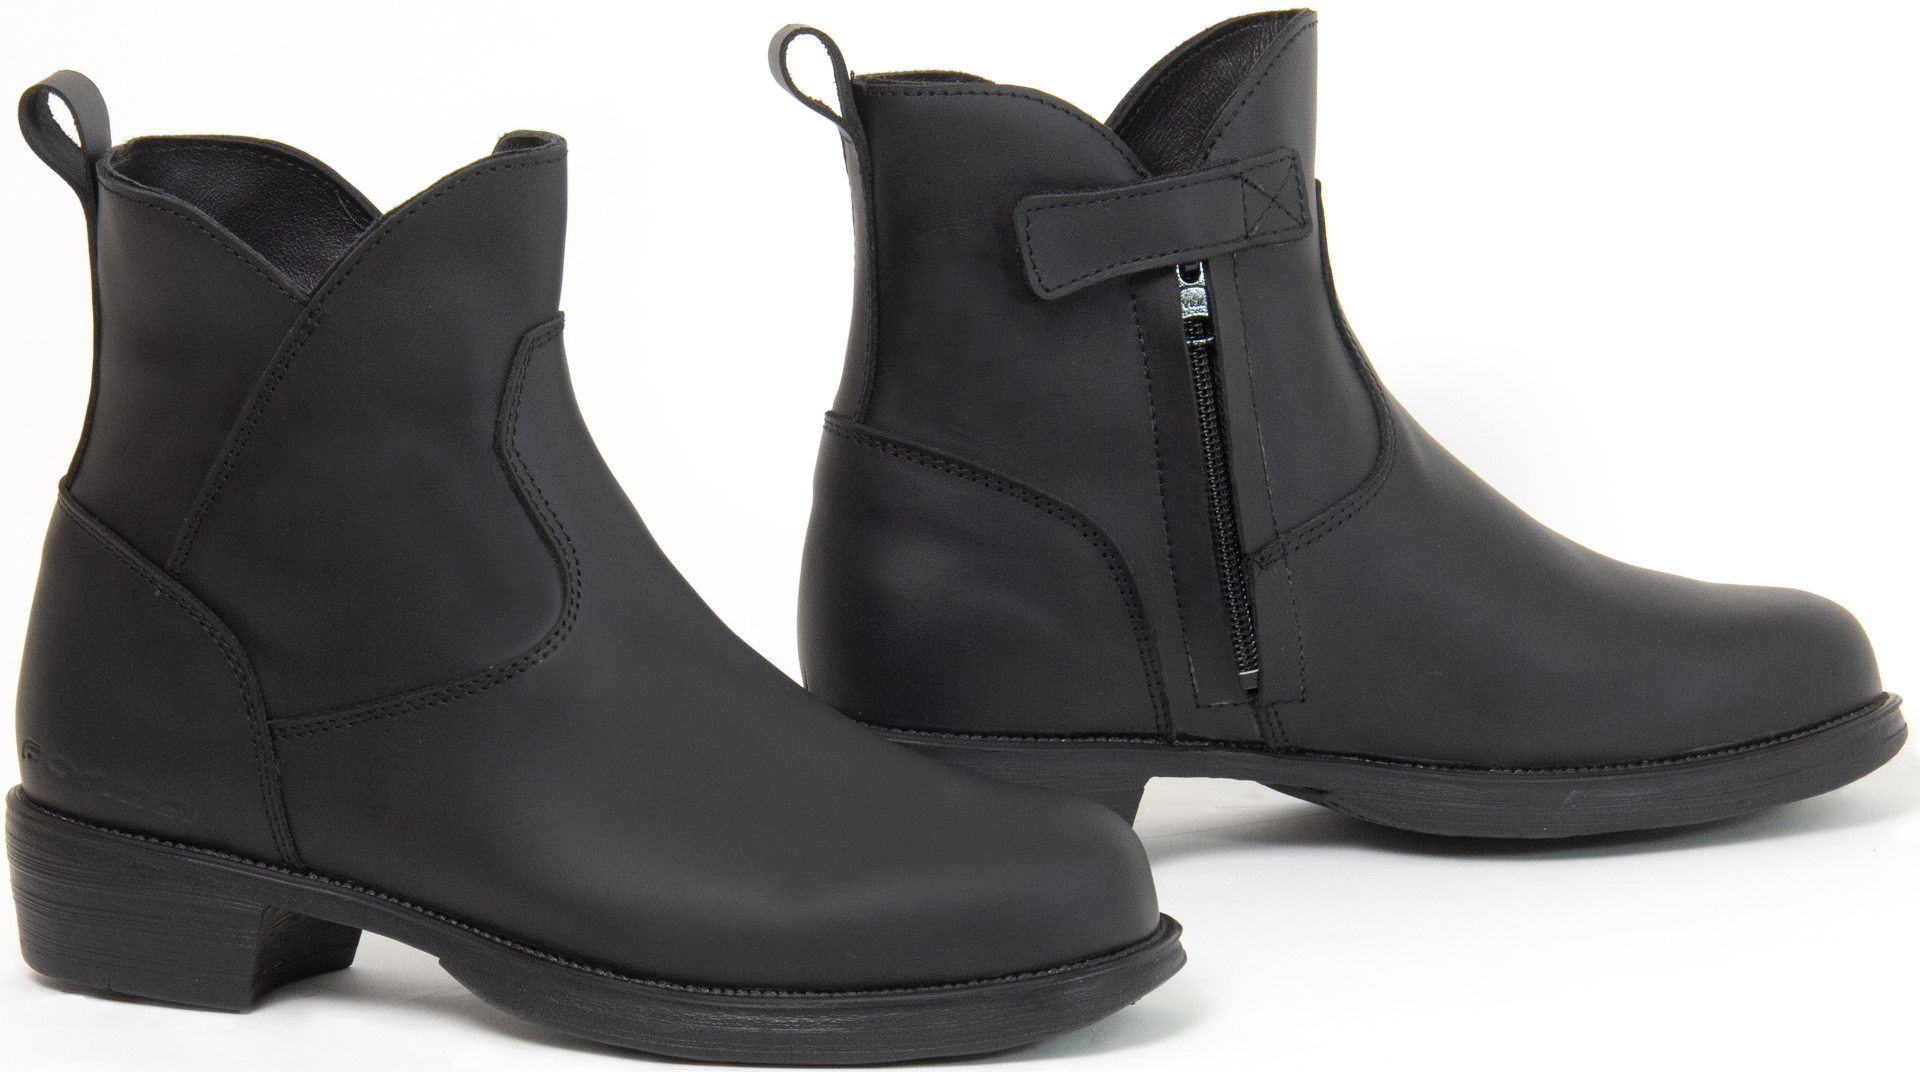 Forma Joy Dry Ladies Motorcycle Boots, black, Size 40 for Women, black, Size 40 for Women